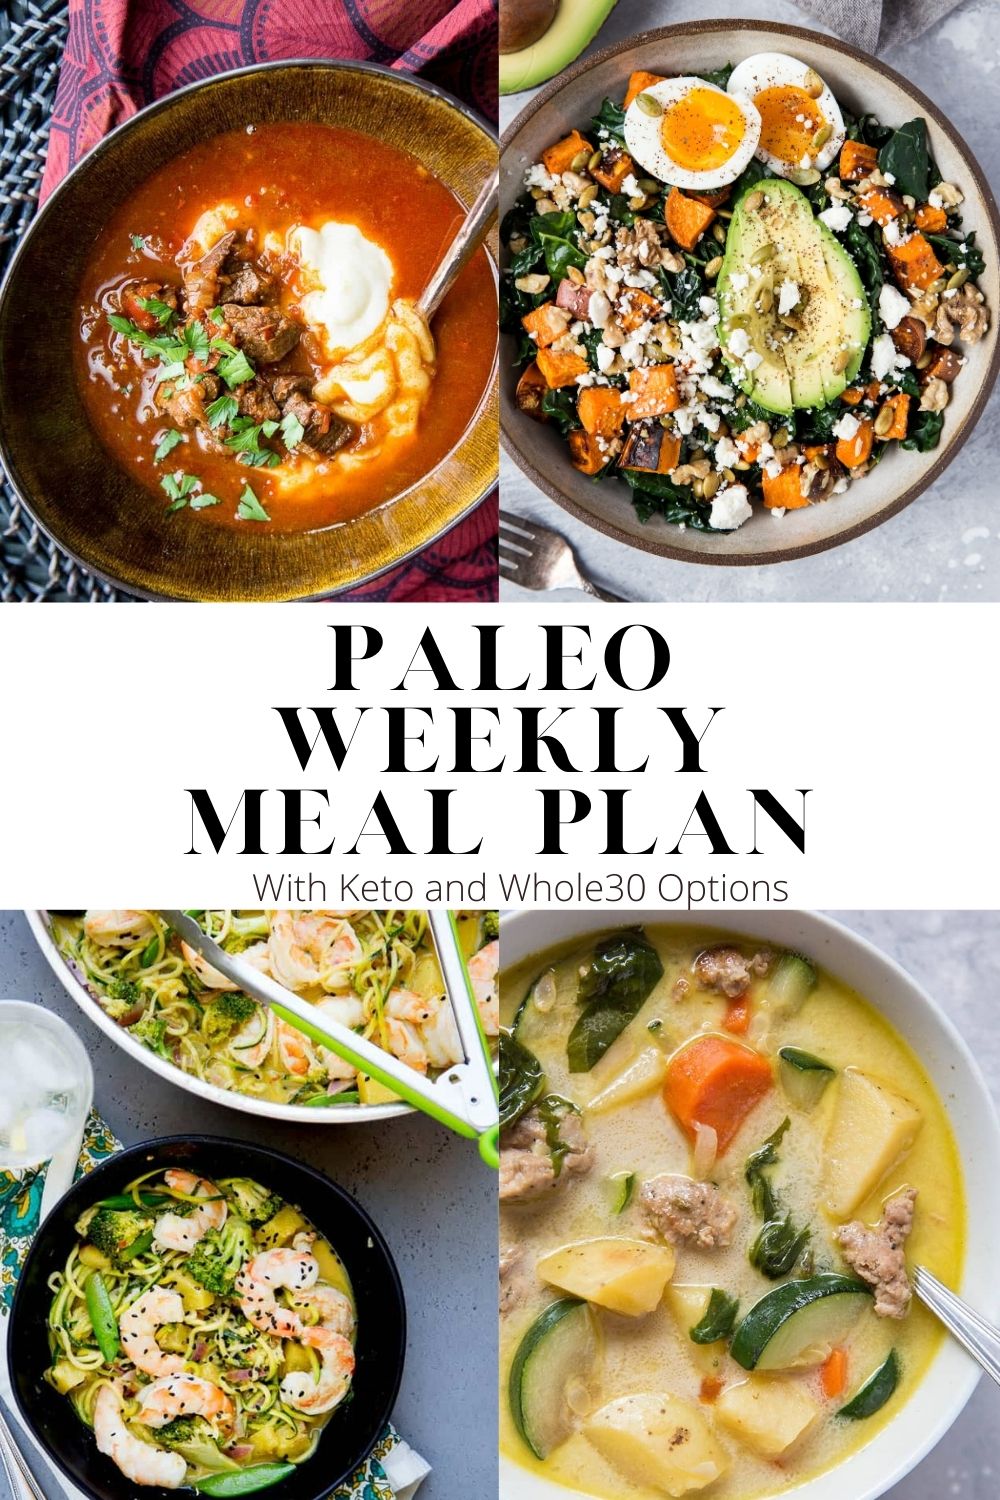 https://www.perrysplate.com/wp-content/uploads/2020/12/paleo-meal-plan-week-1-1.jpg